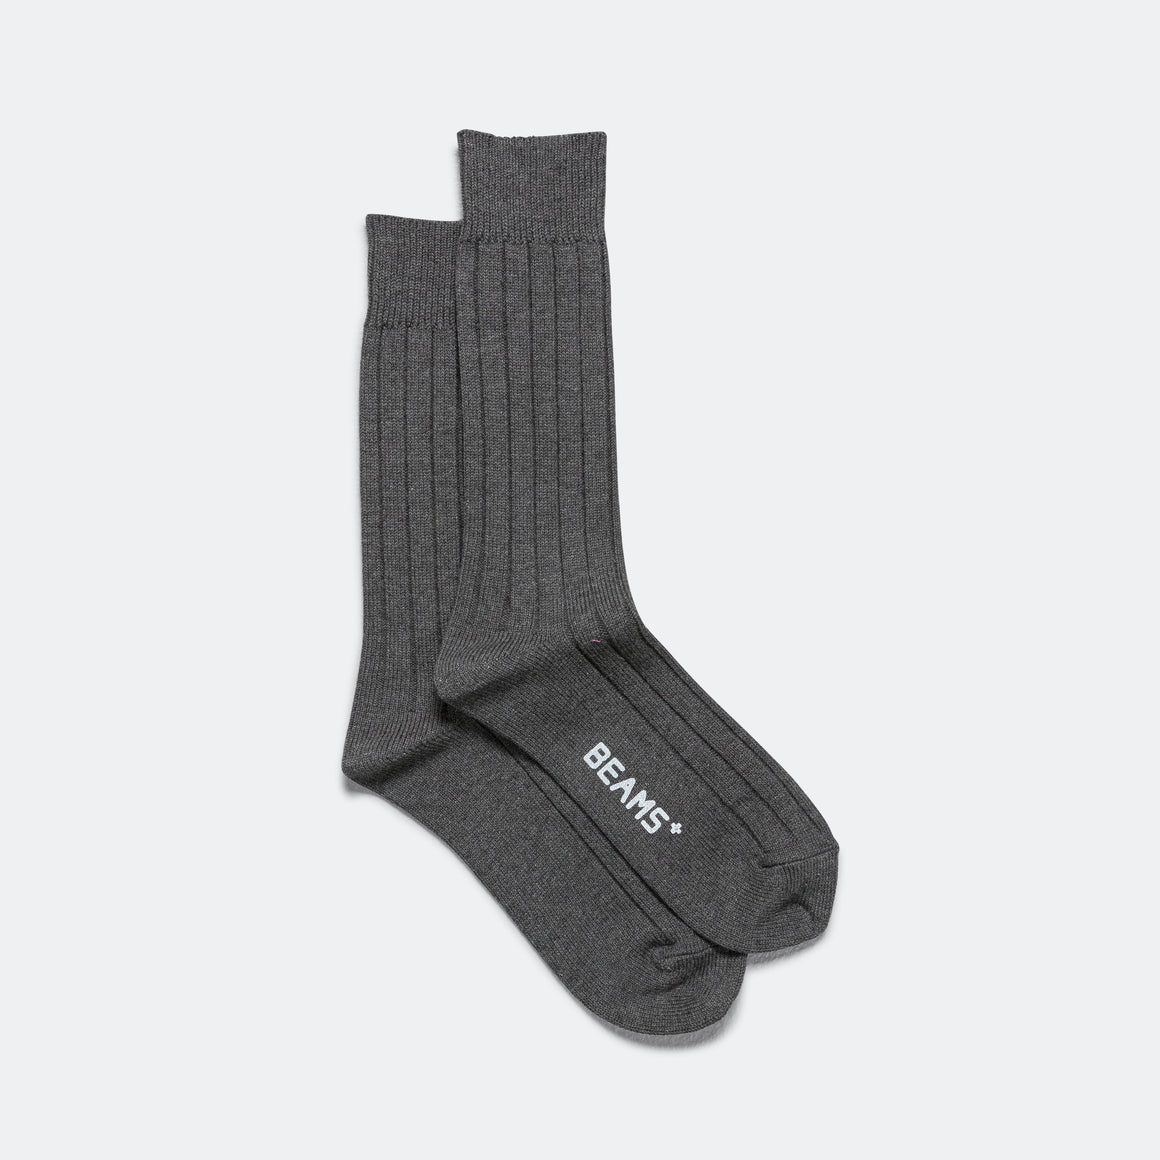 Solid Ribs Socks - Charcoal